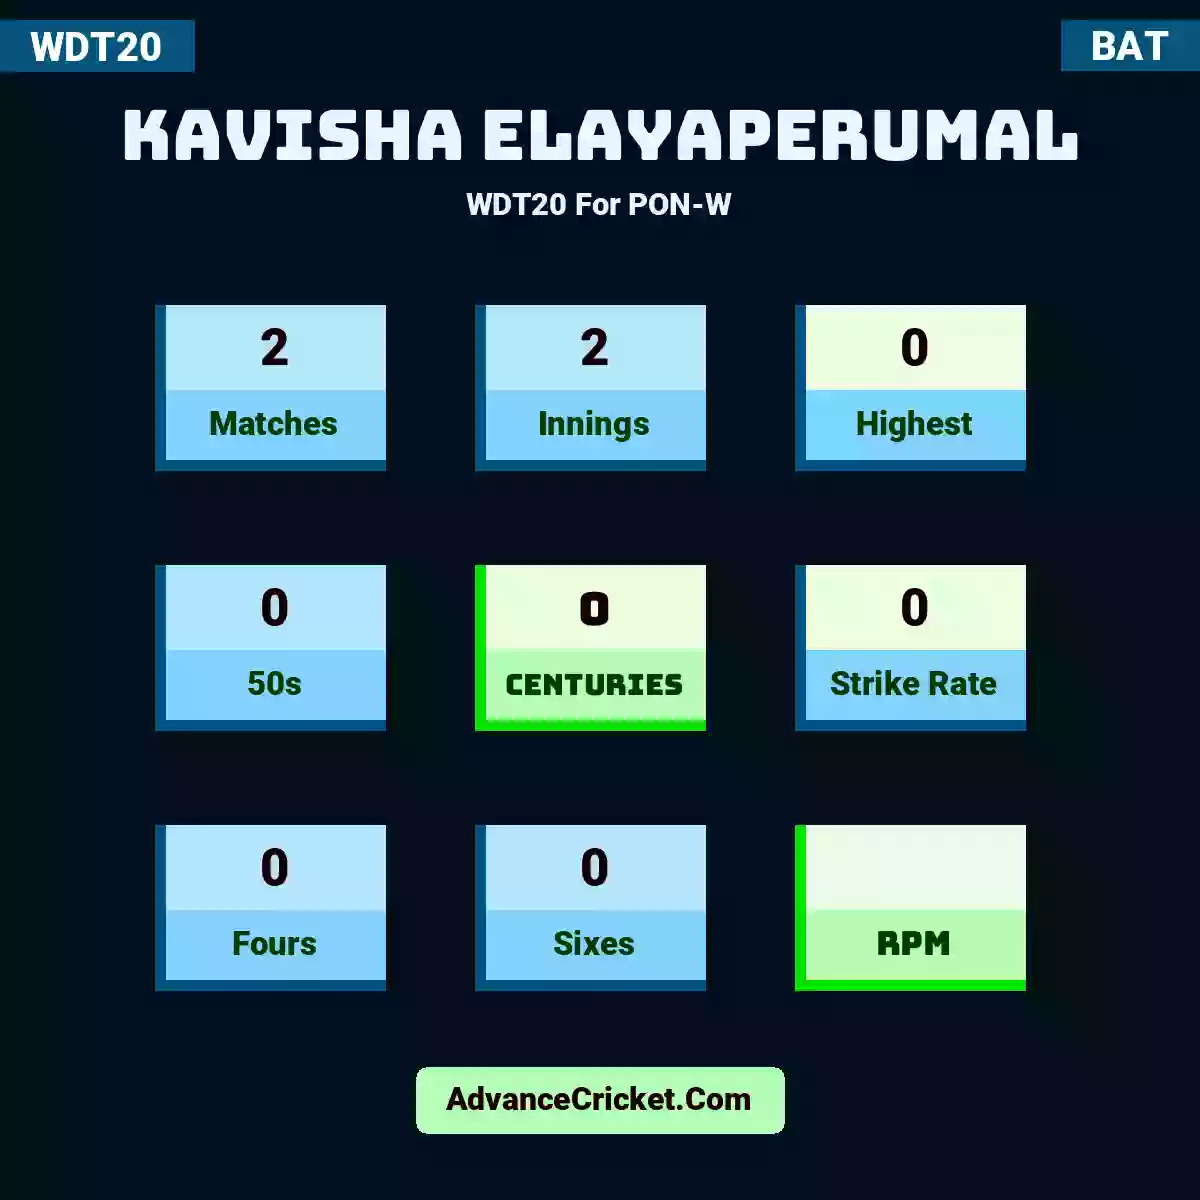 Kavisha Elayaperumal WDT20  For PON-W, Kavisha Elayaperumal played 2 matches, scored 0 runs as highest, 0 half-centuries, and 0 centuries, with a strike rate of 0. K.Elayaperumal hit 0 fours and 0 sixes.